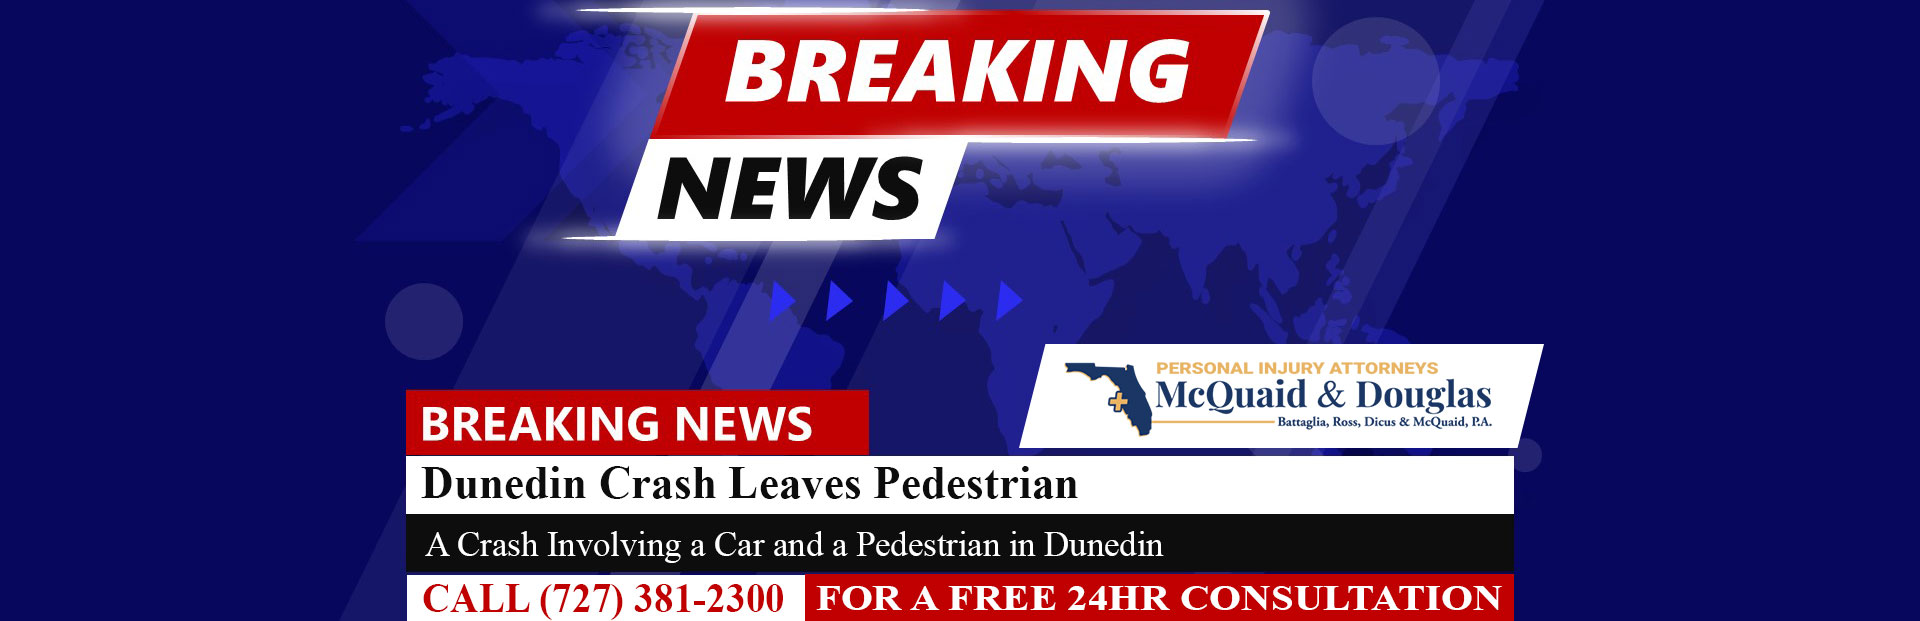 [04-28-23] Dunedin Crash Leaves Pedestrian with Life-Threatening Injuries